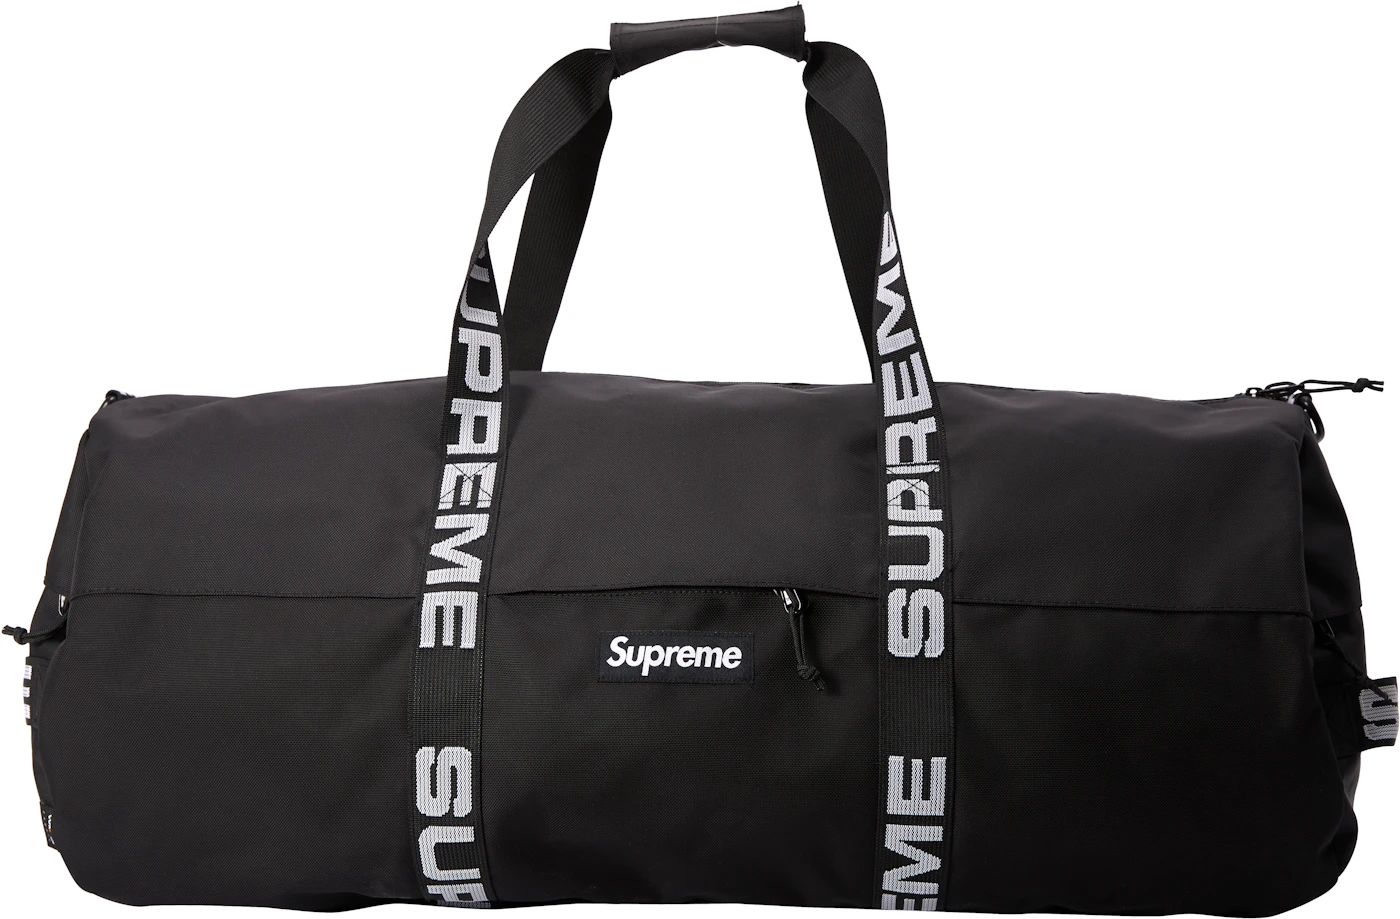 Supreme  Gym bag, Duffle, Shopping